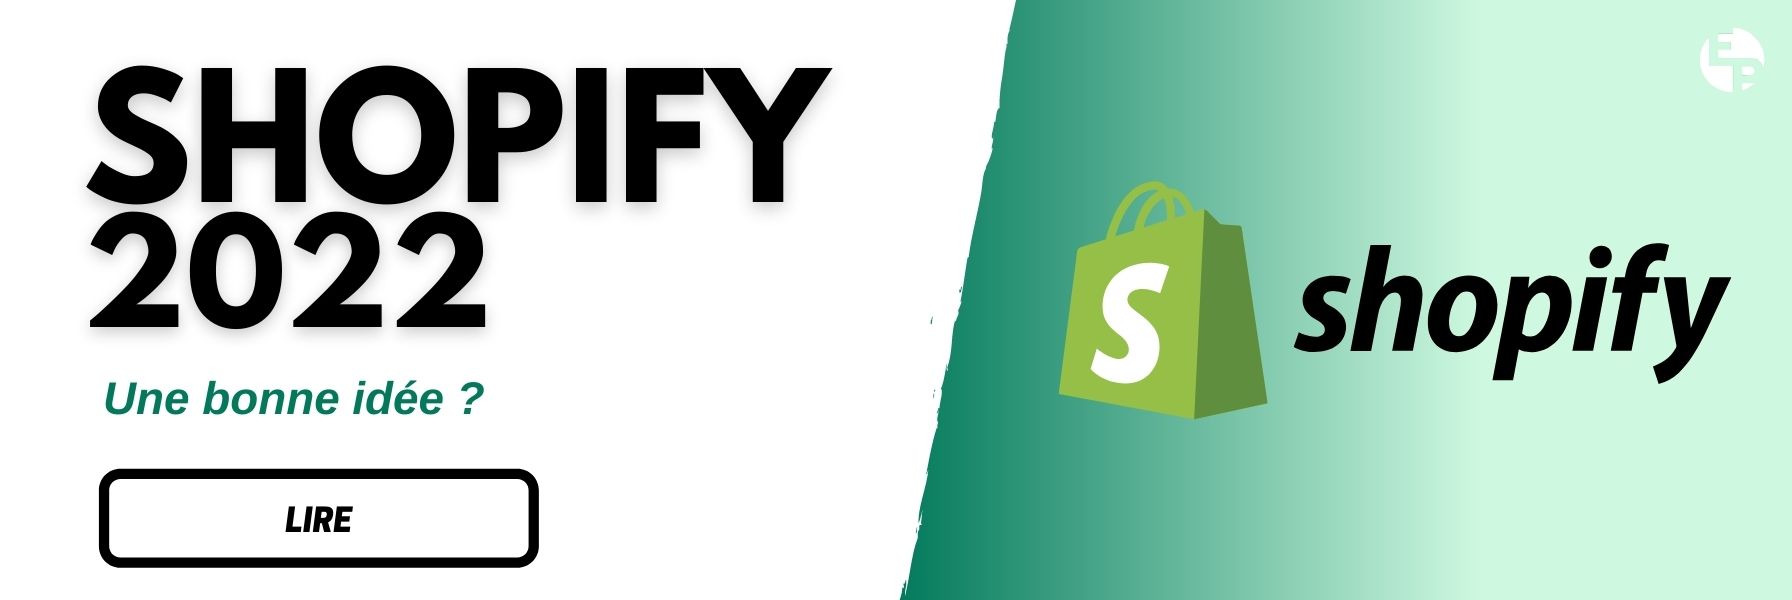 Shopify 2022 Ecommerce